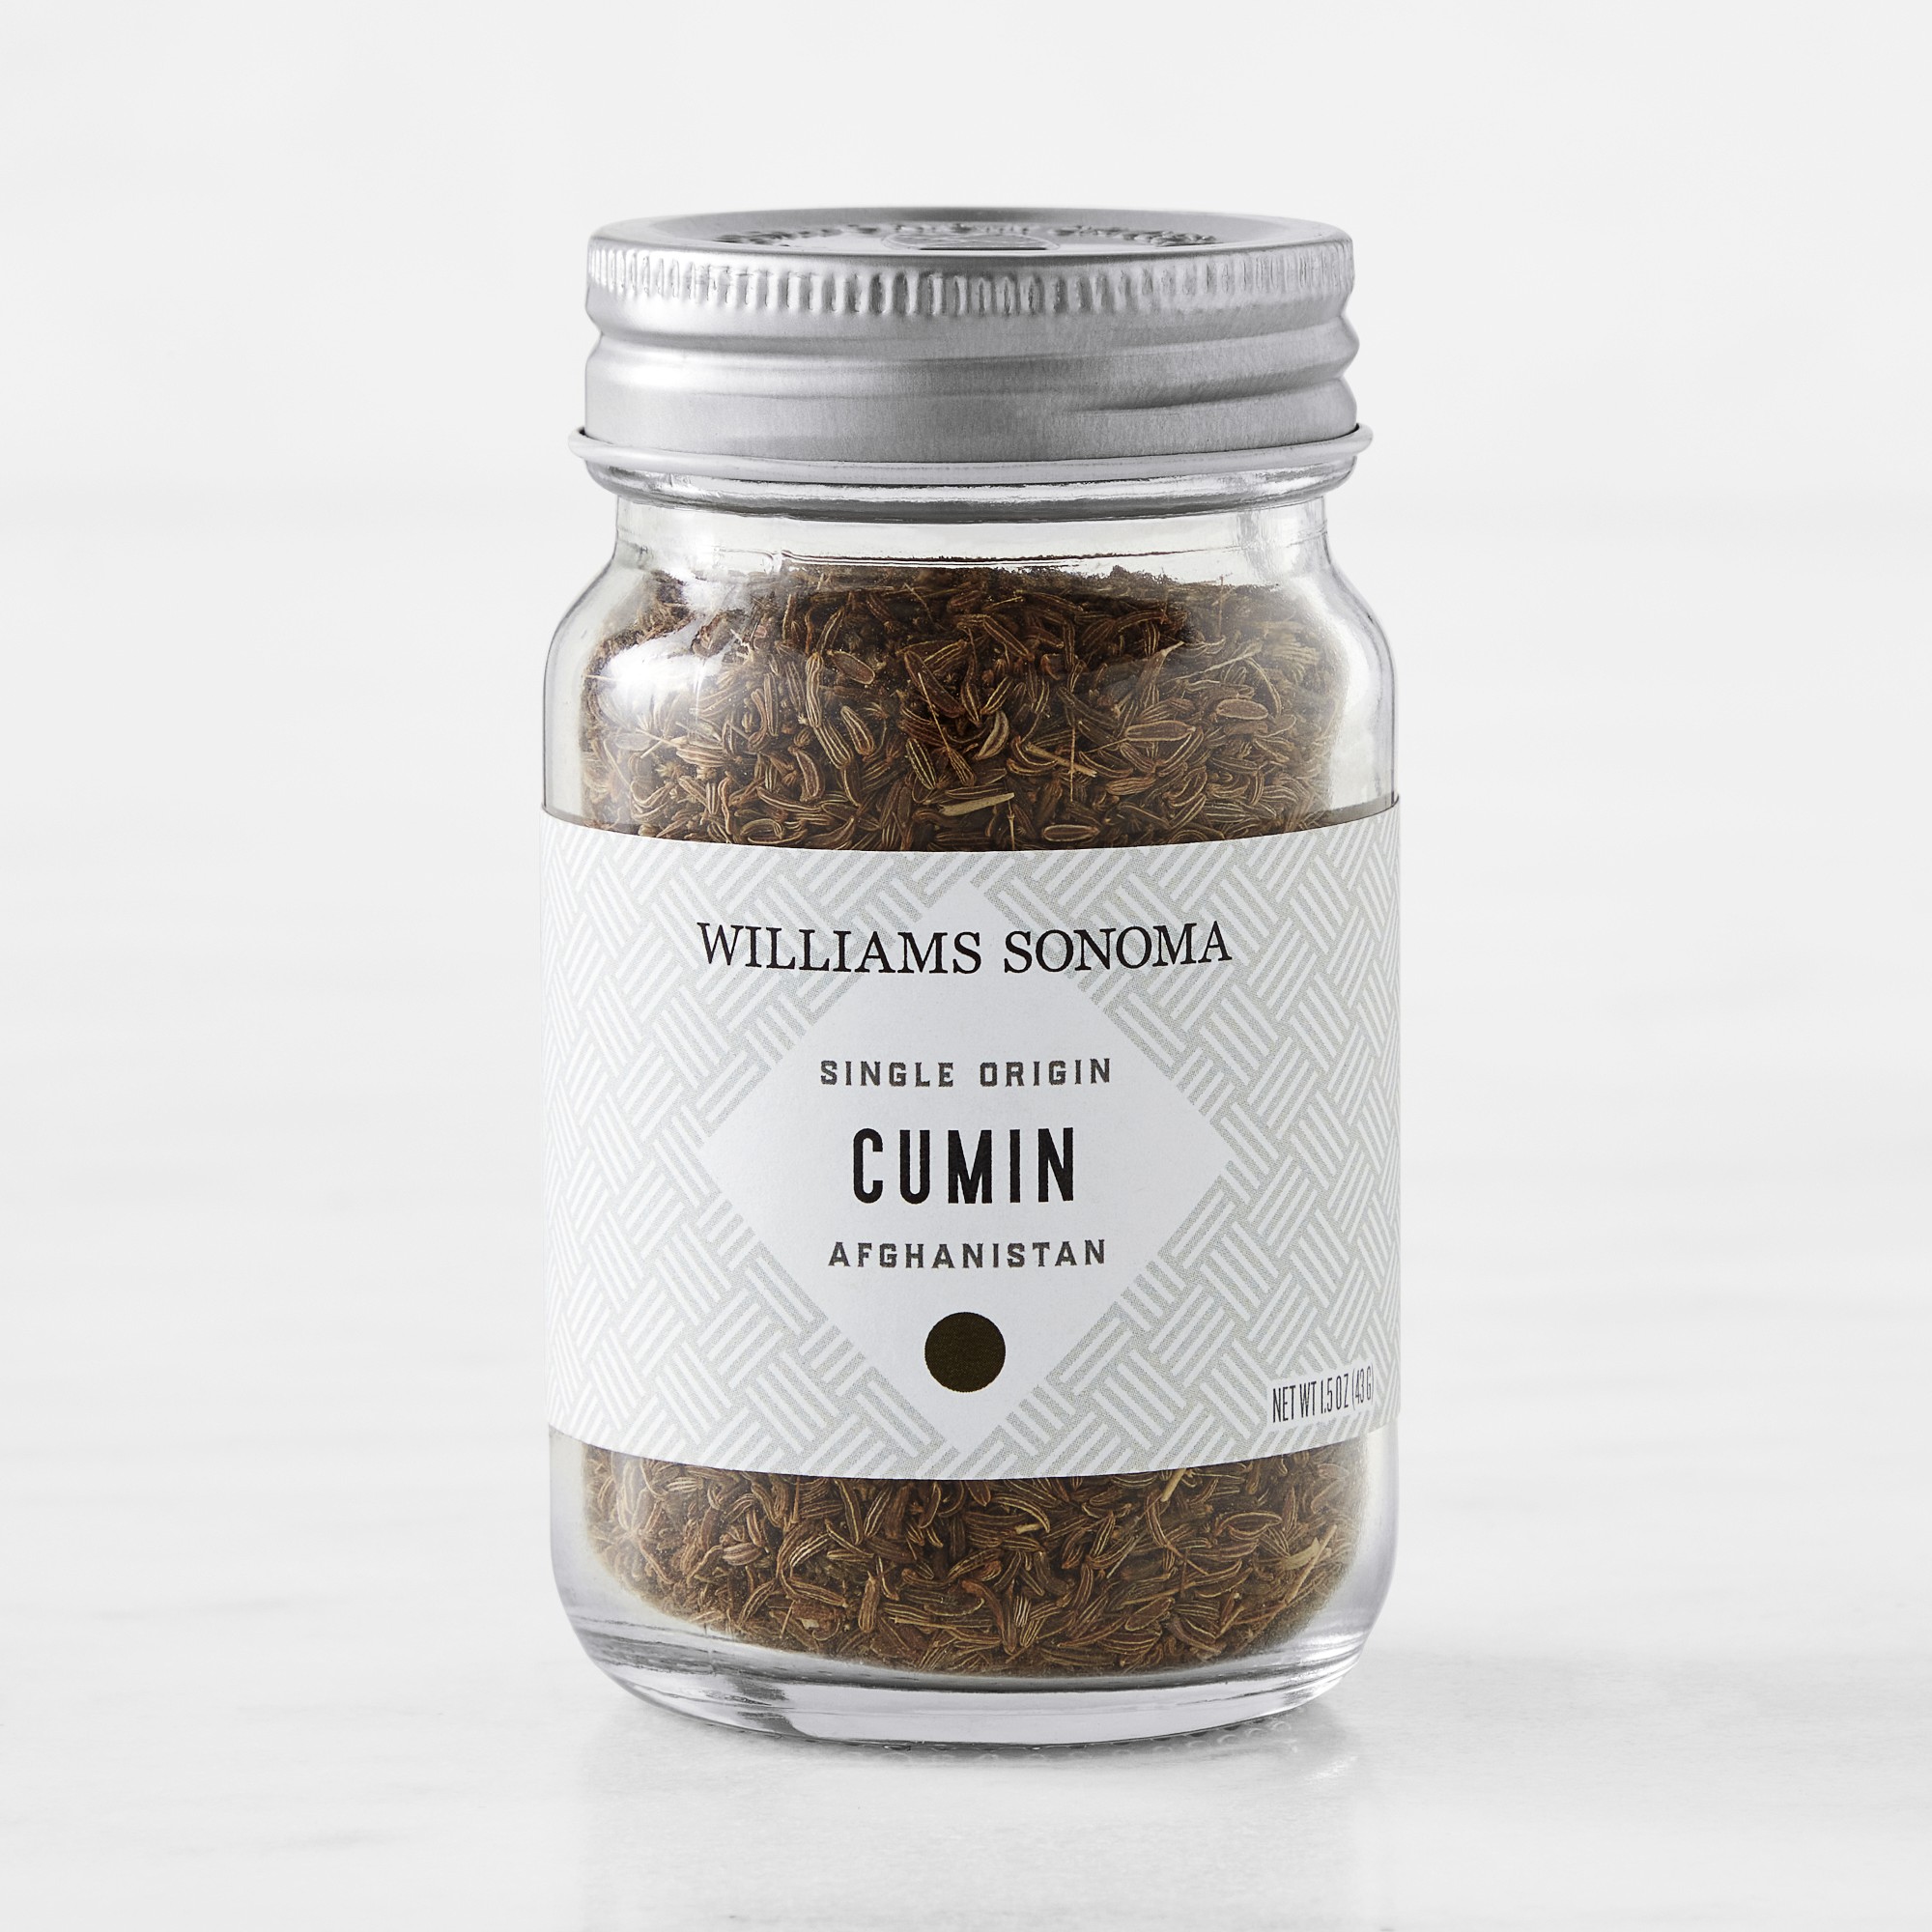 Williams Sonoma Cumin by Burlap & Barrel